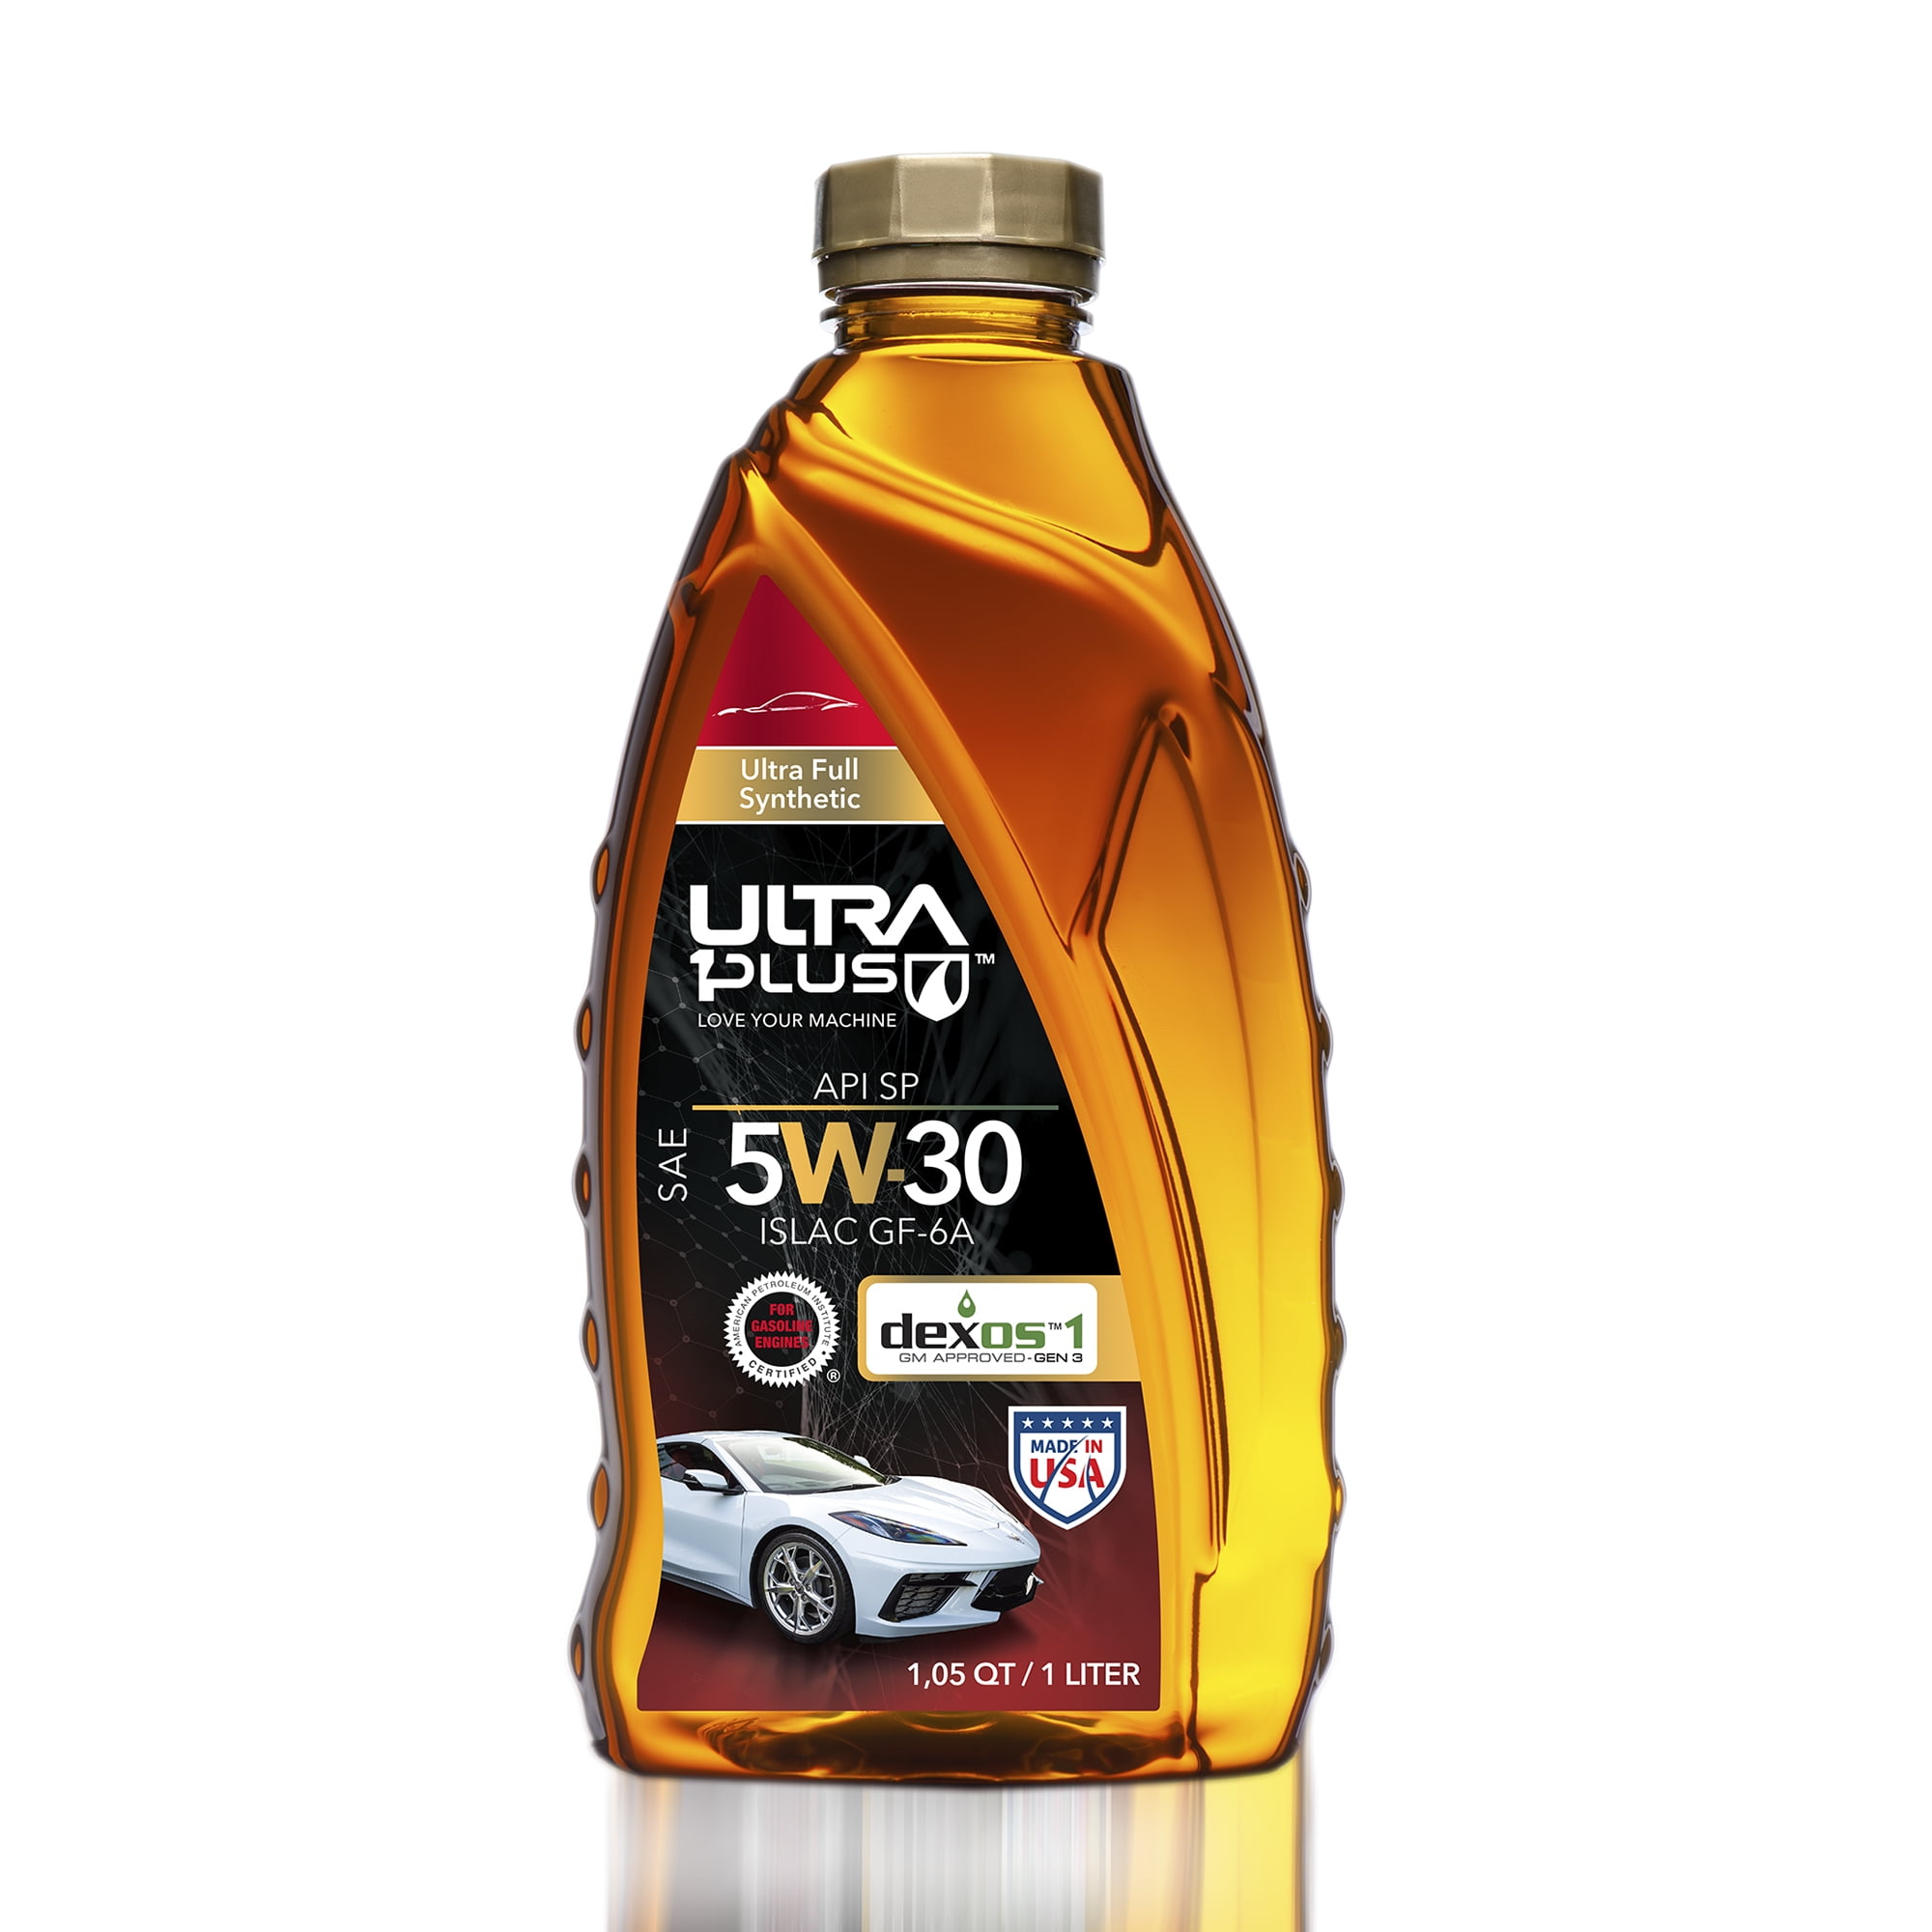 Ultra1plus SAE 5W-30 Full Synthetic Motor Oil, API SP, Ilsac Gf-6a, Dexos1 Gen3